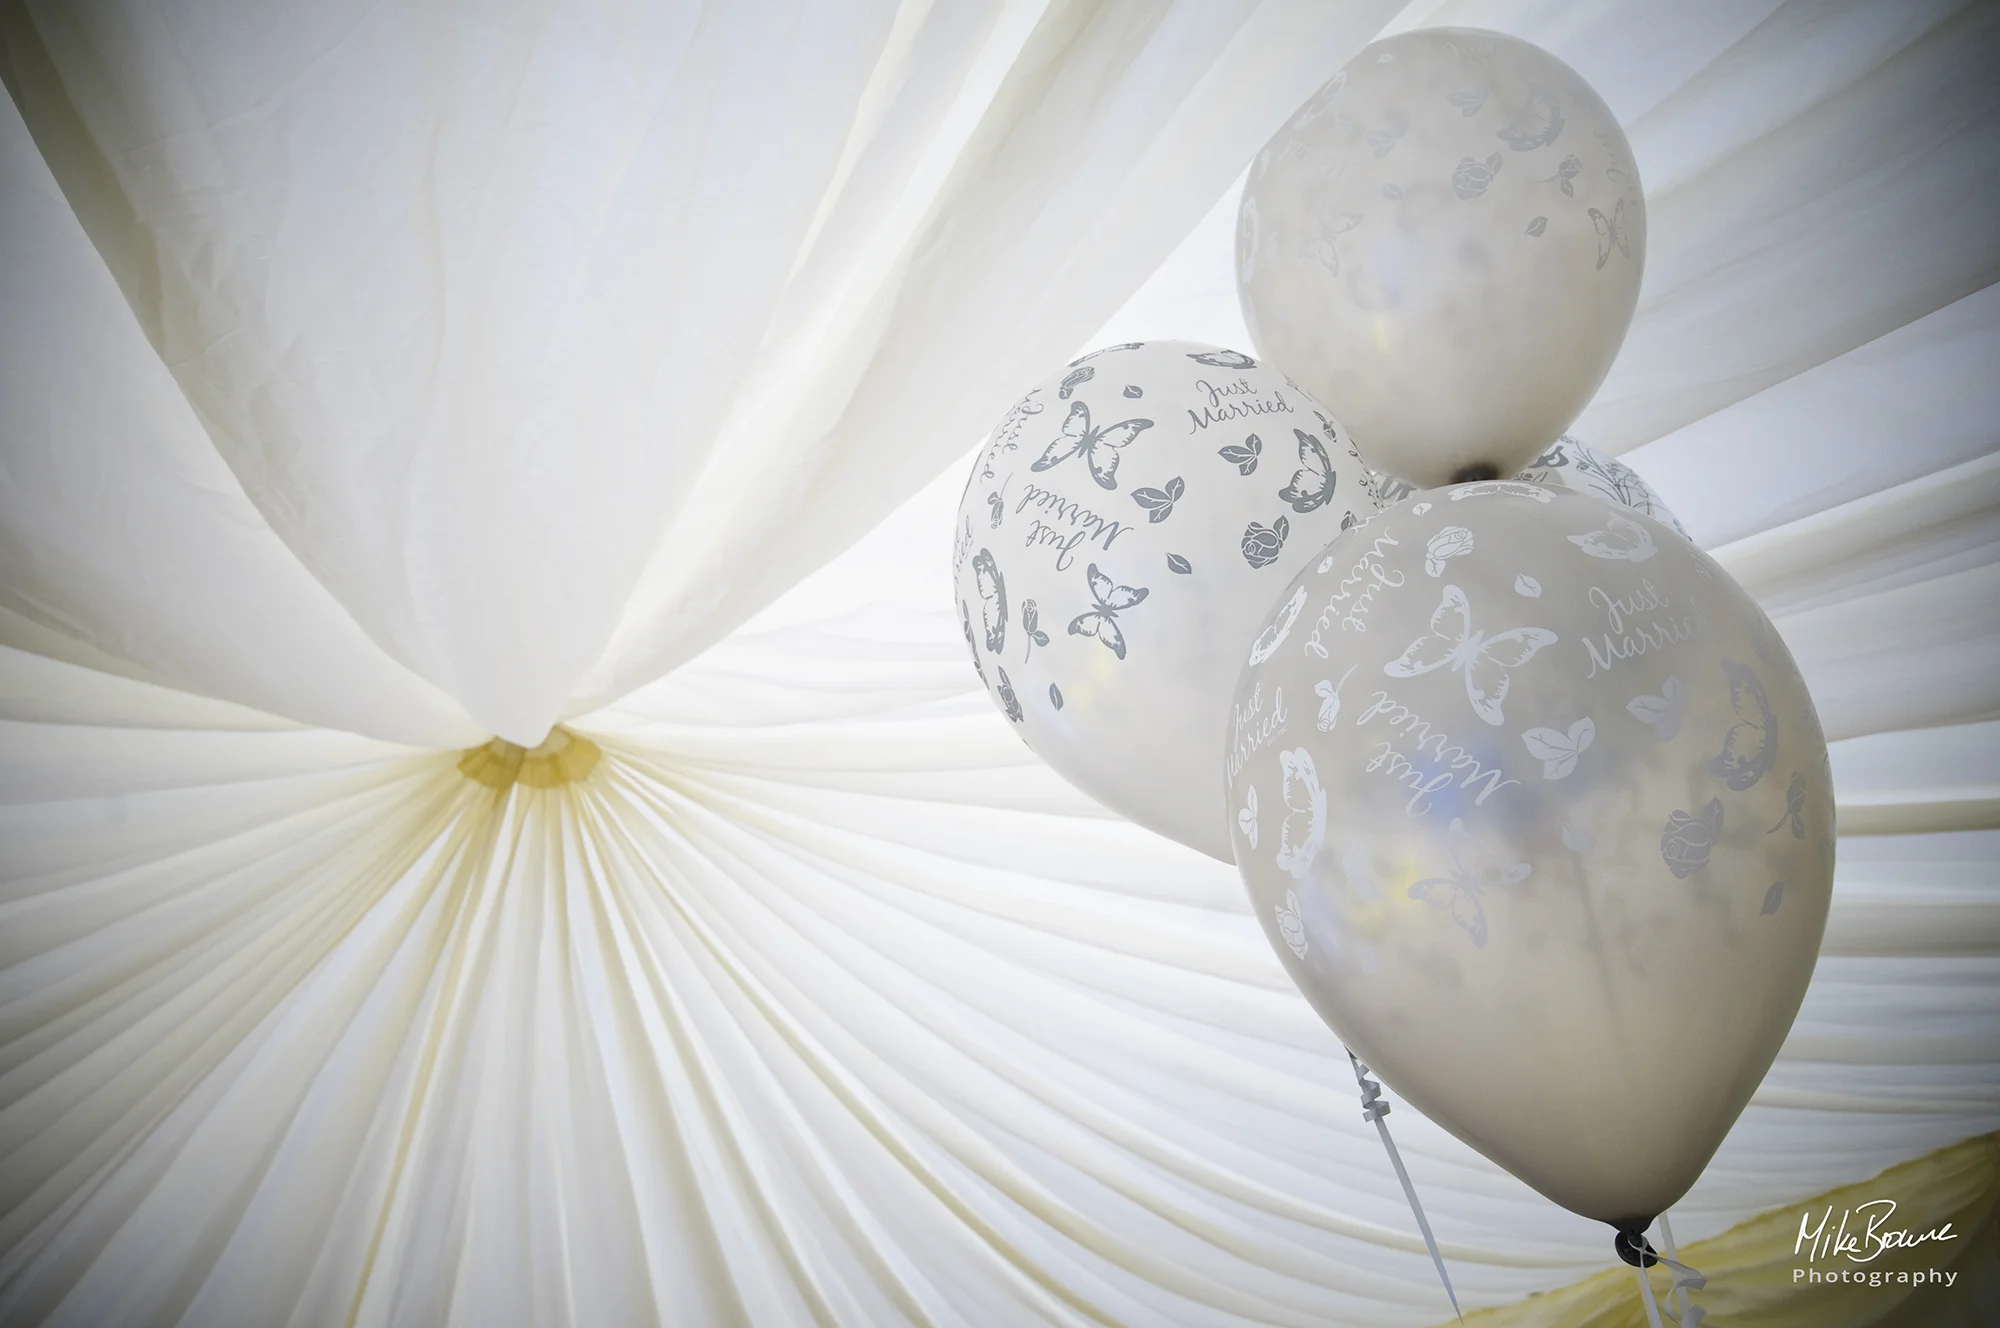 Wedding balloons in a wedding tent